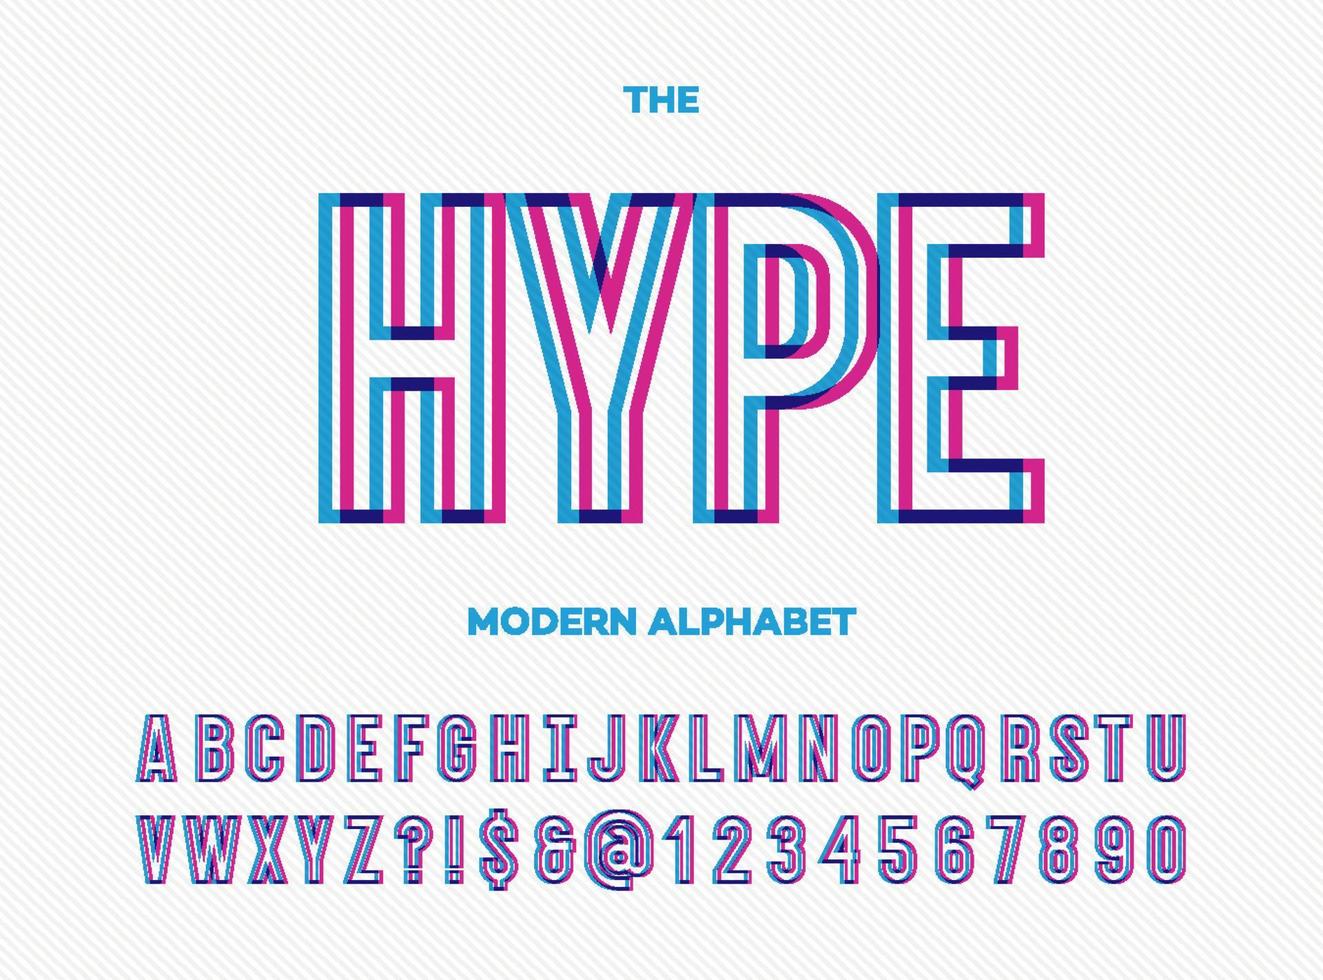 hype modernes alphabet vektor